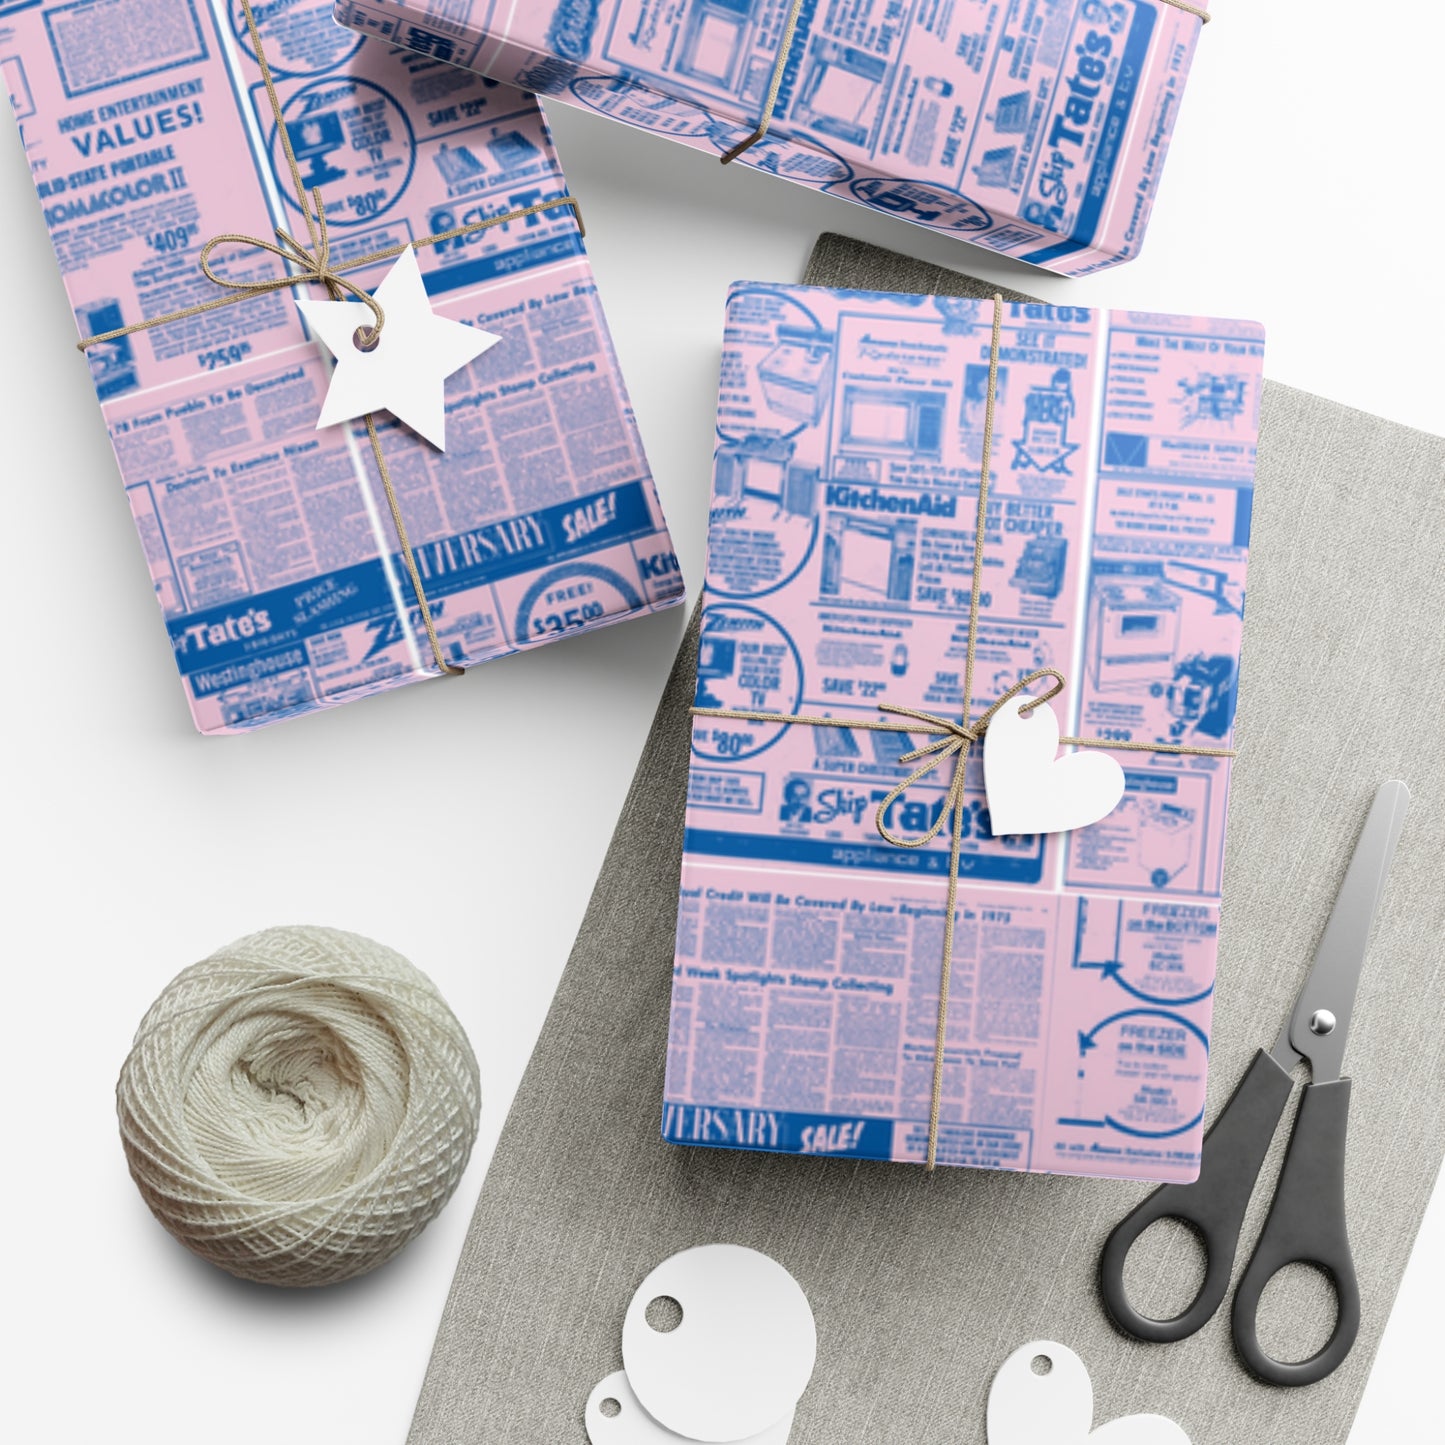 Skip Tate’s Appliances Sales Gift Wrap Lavender colorway